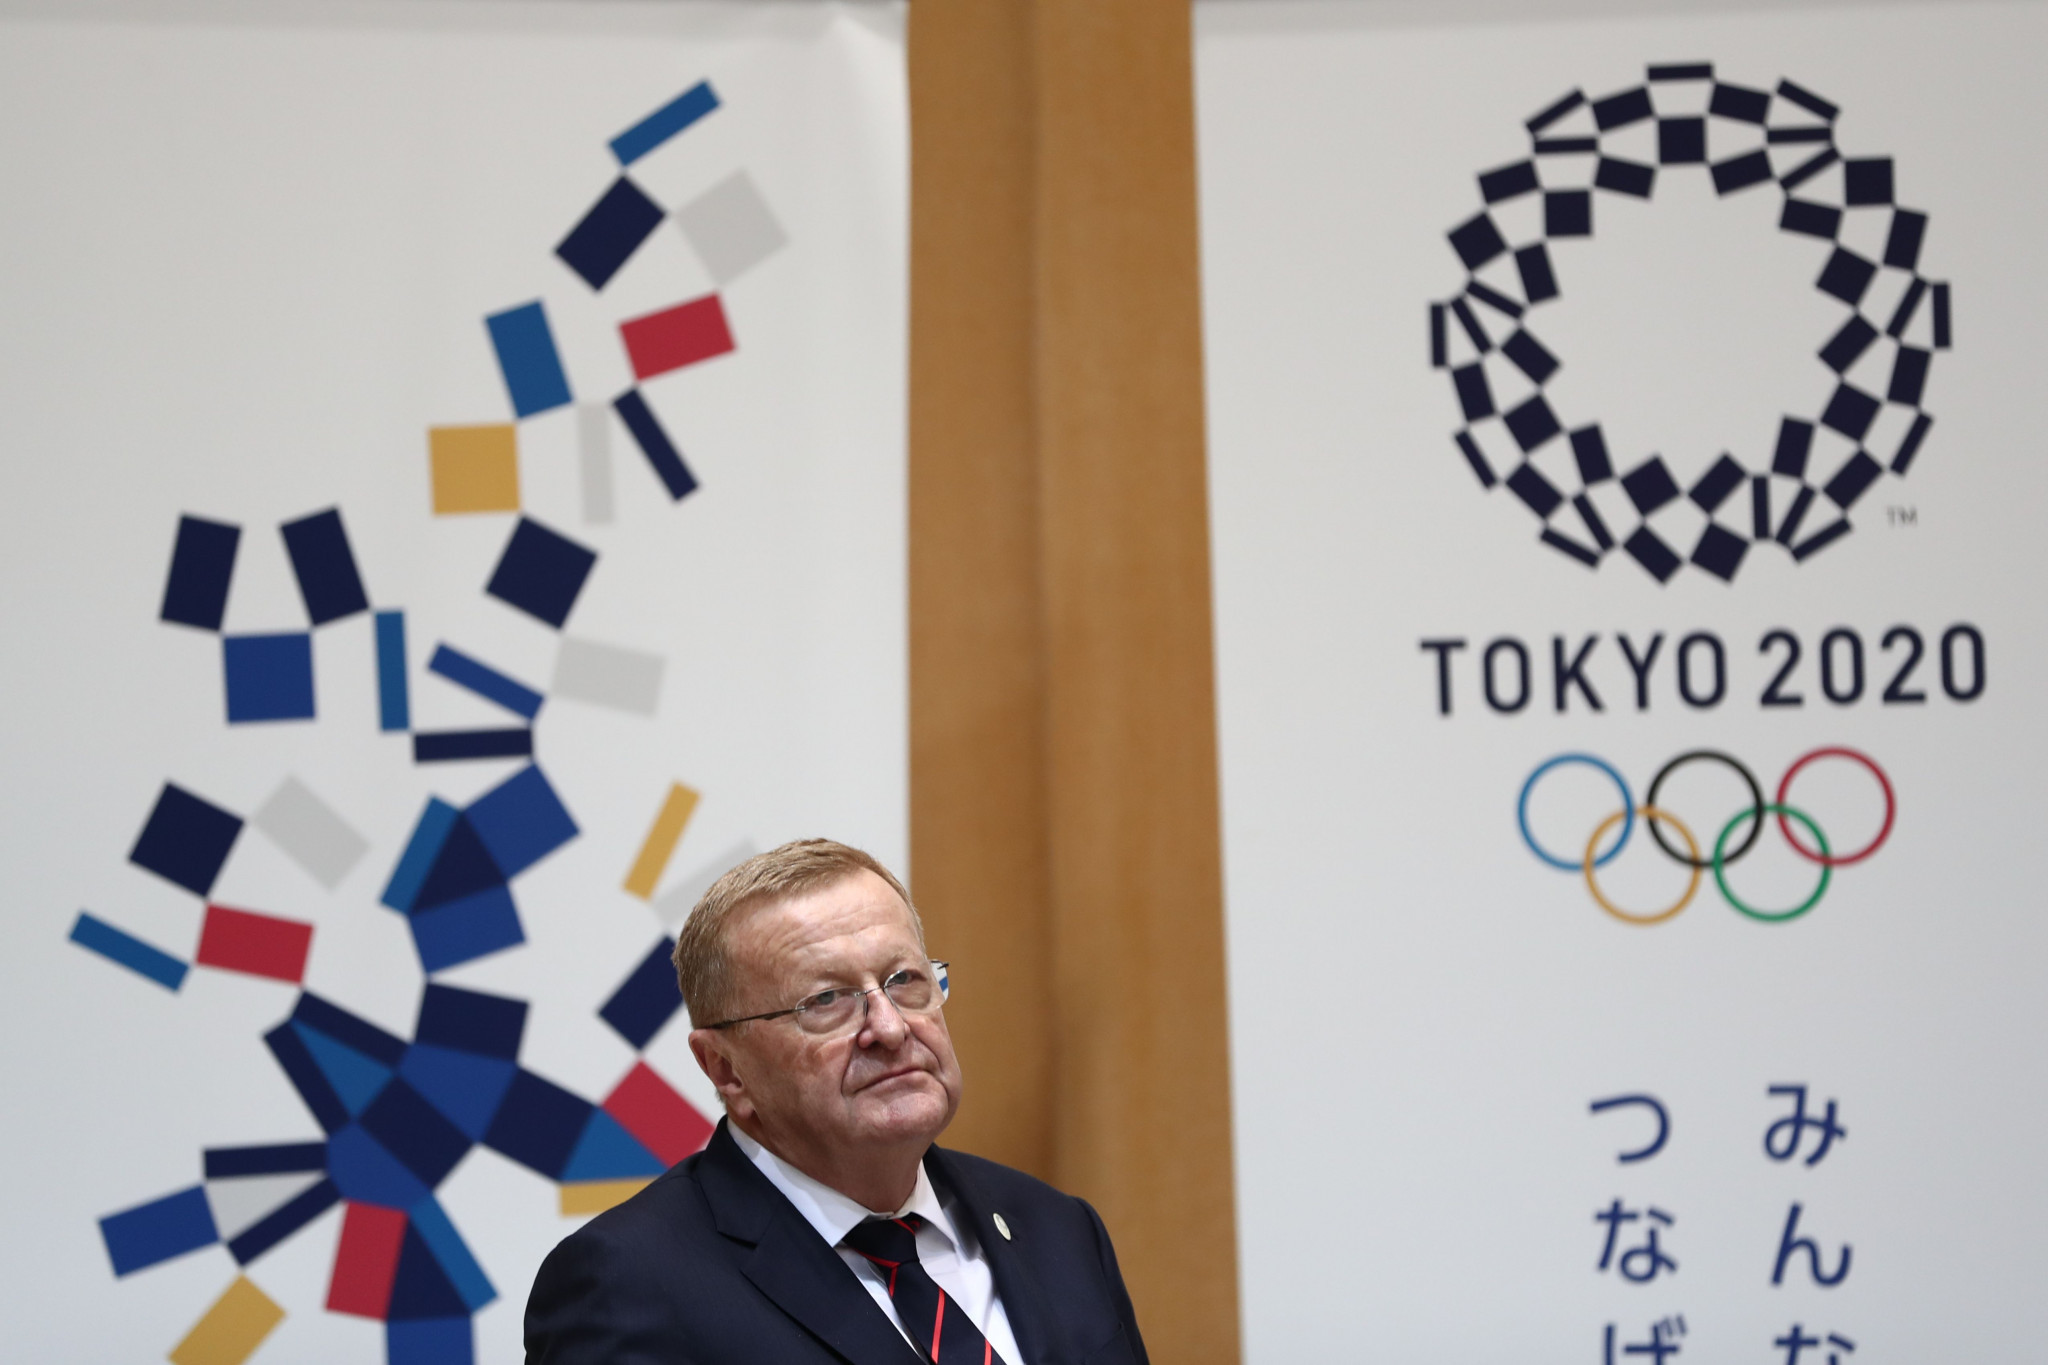 IOC vice-president Coates joins Advisory Board for Australia's 2027 Rugby World Cup bid